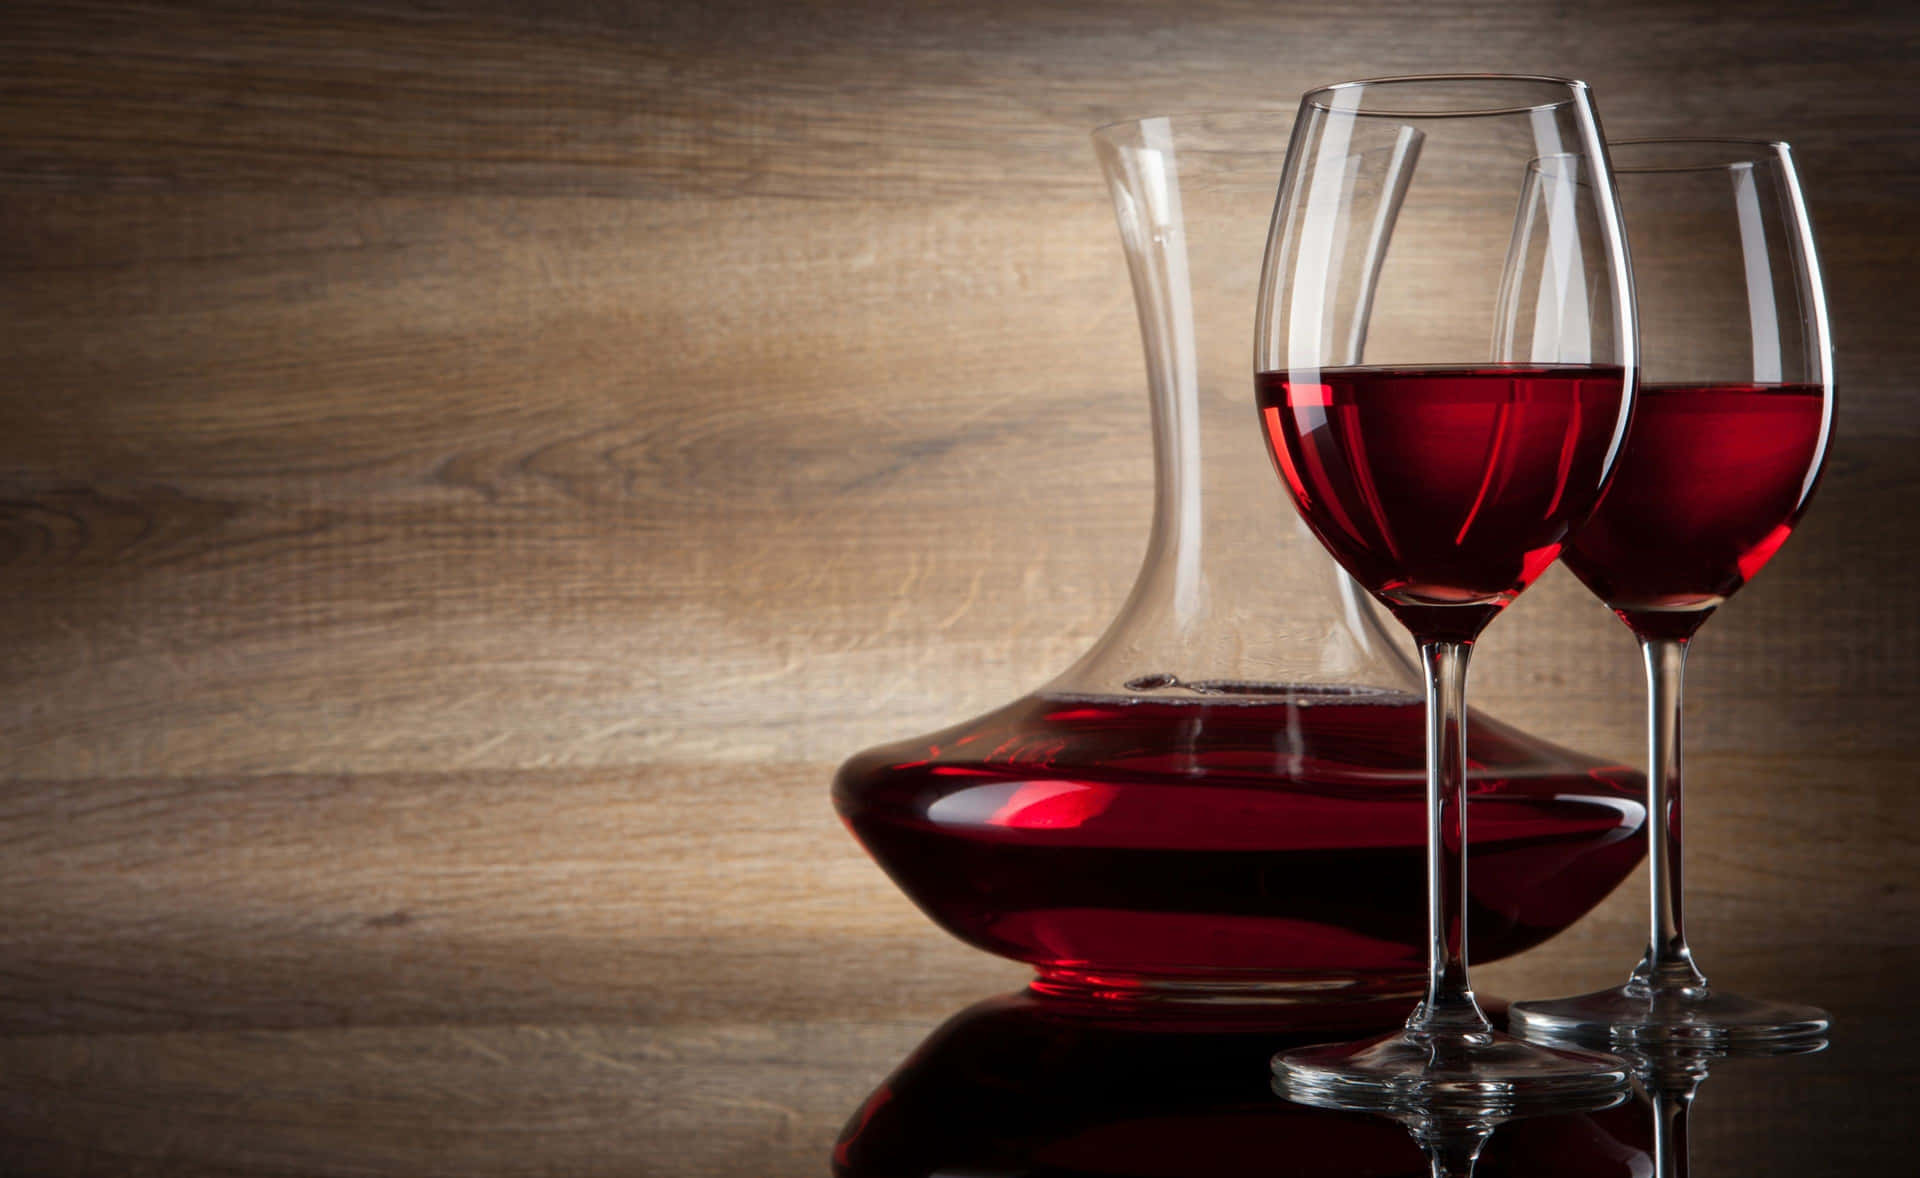 Elegant Red Wine Glass in a Romantic Setting Wallpaper